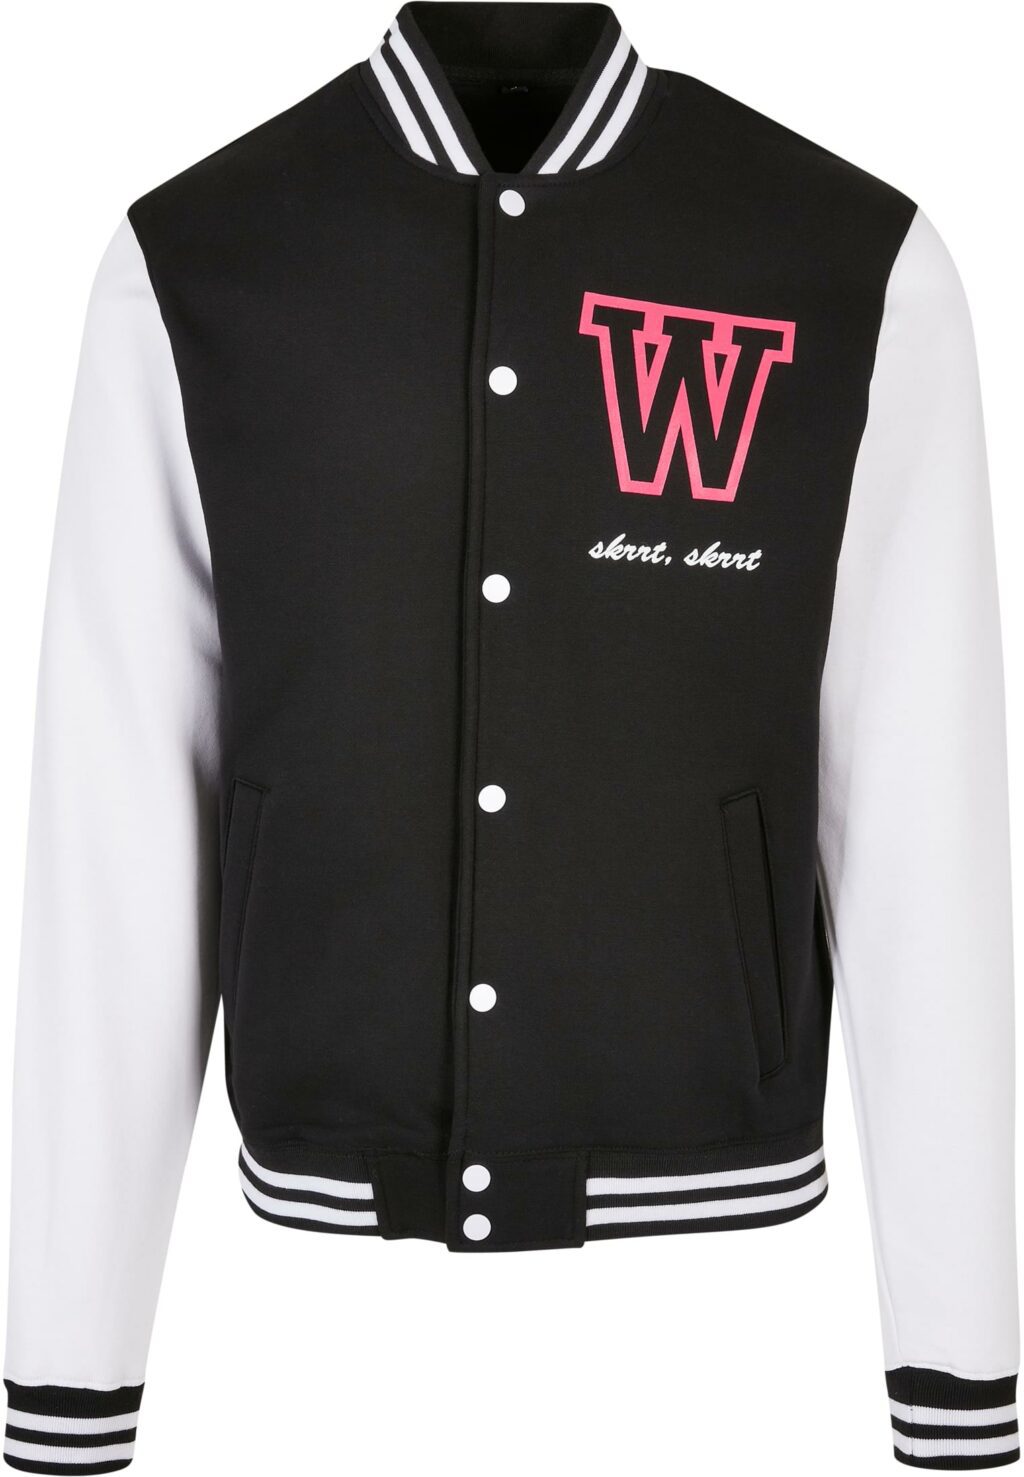 Wonderful College Jacket blk/wht MT2380